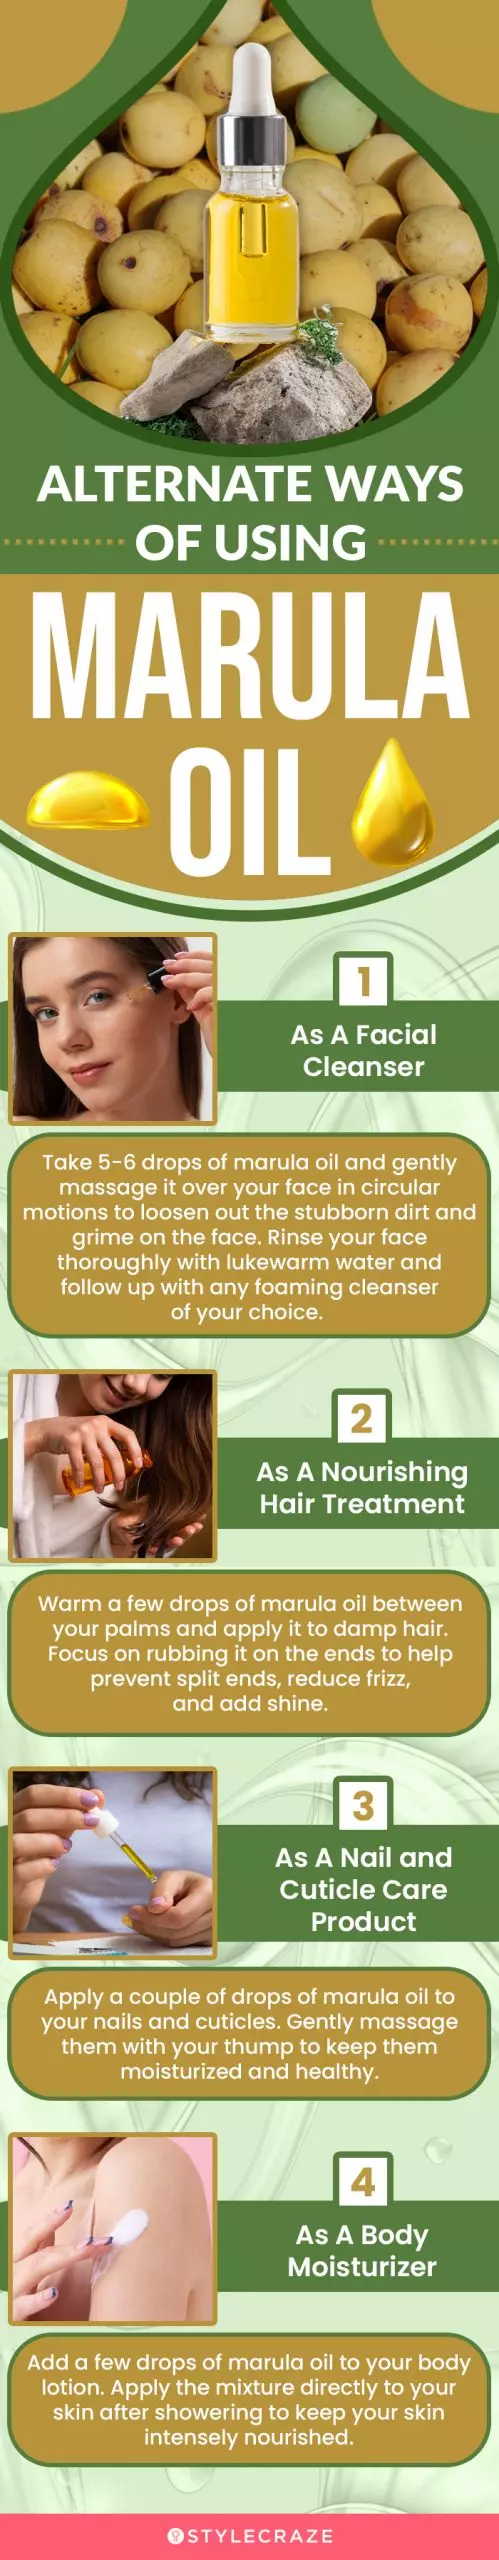 Alternate Ways Of Using Marula Oil (infographic)